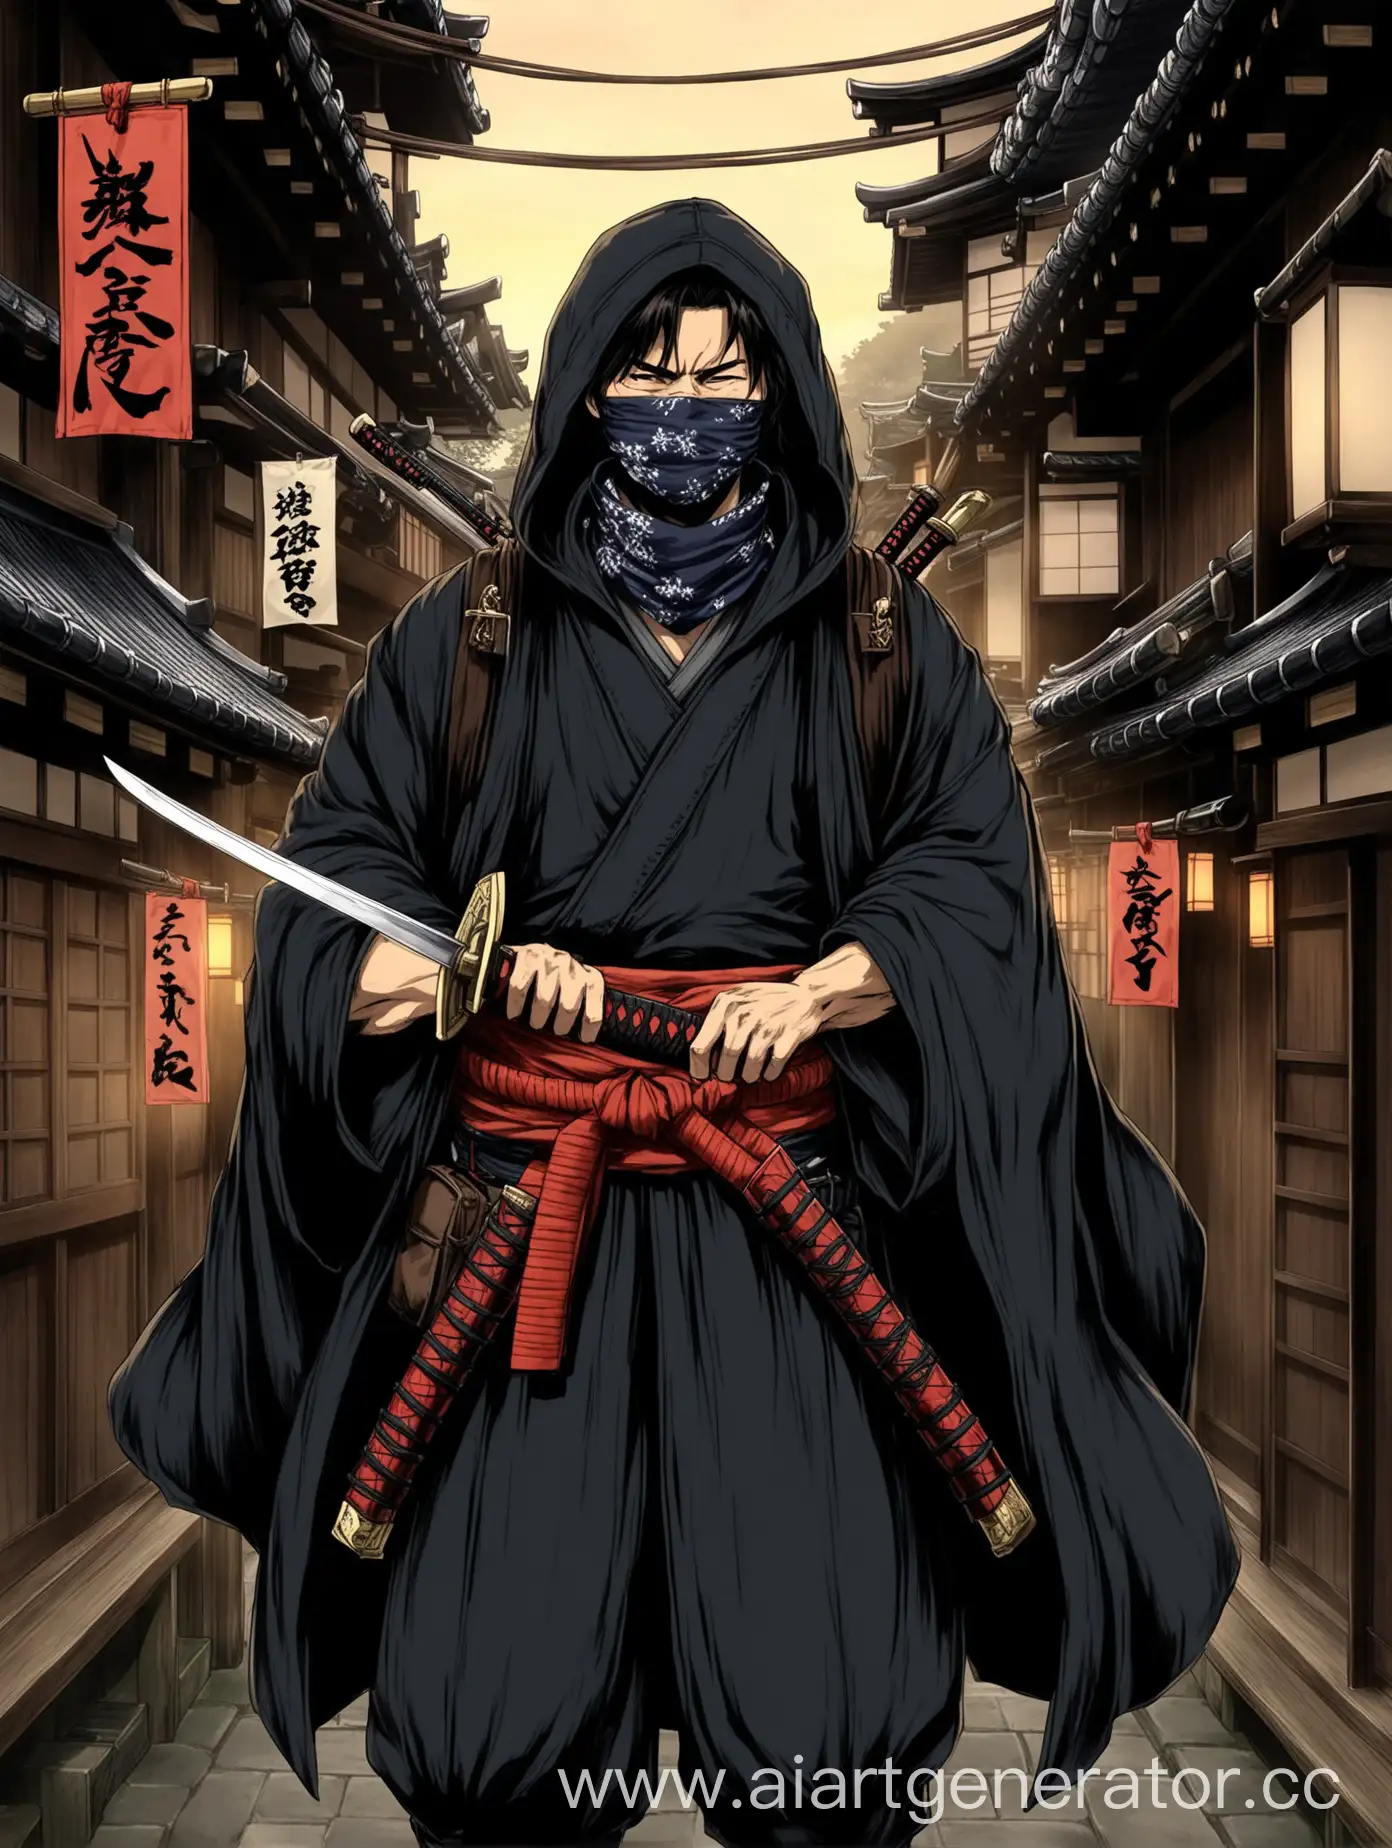 Mysterious-Samurai-Warrior-in-MeijiEra-Kyoto-Street